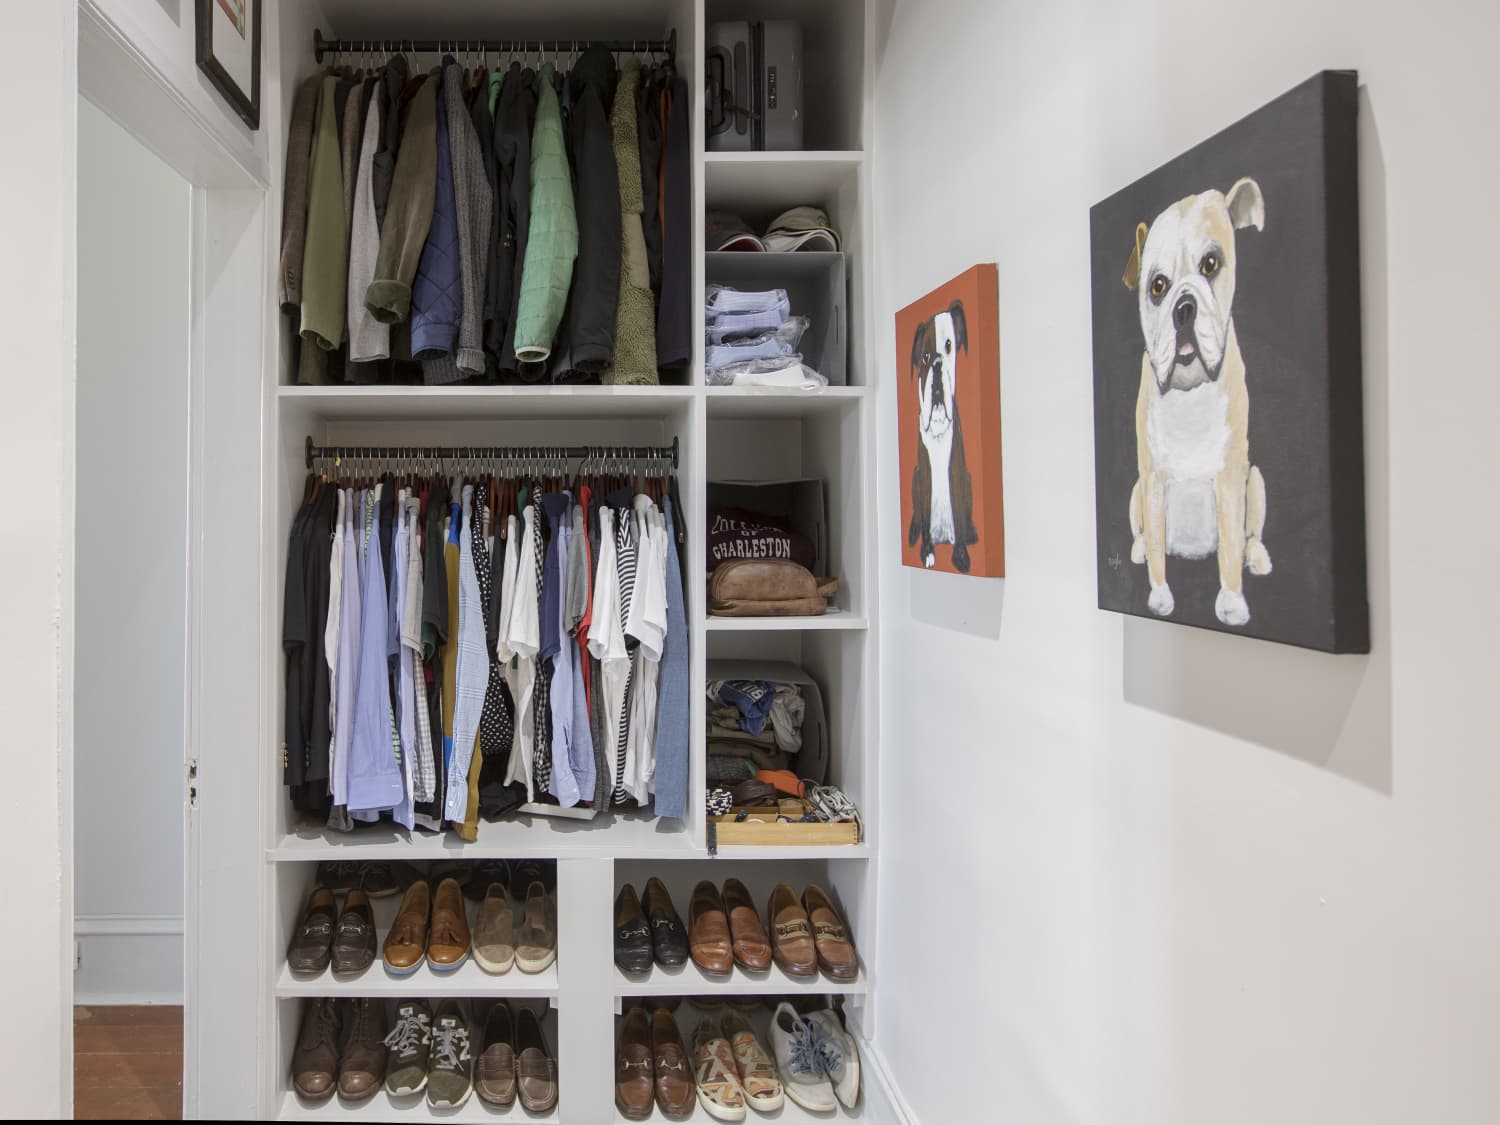 An Easy Storage Solution for a Small Closet - Sarah Joy